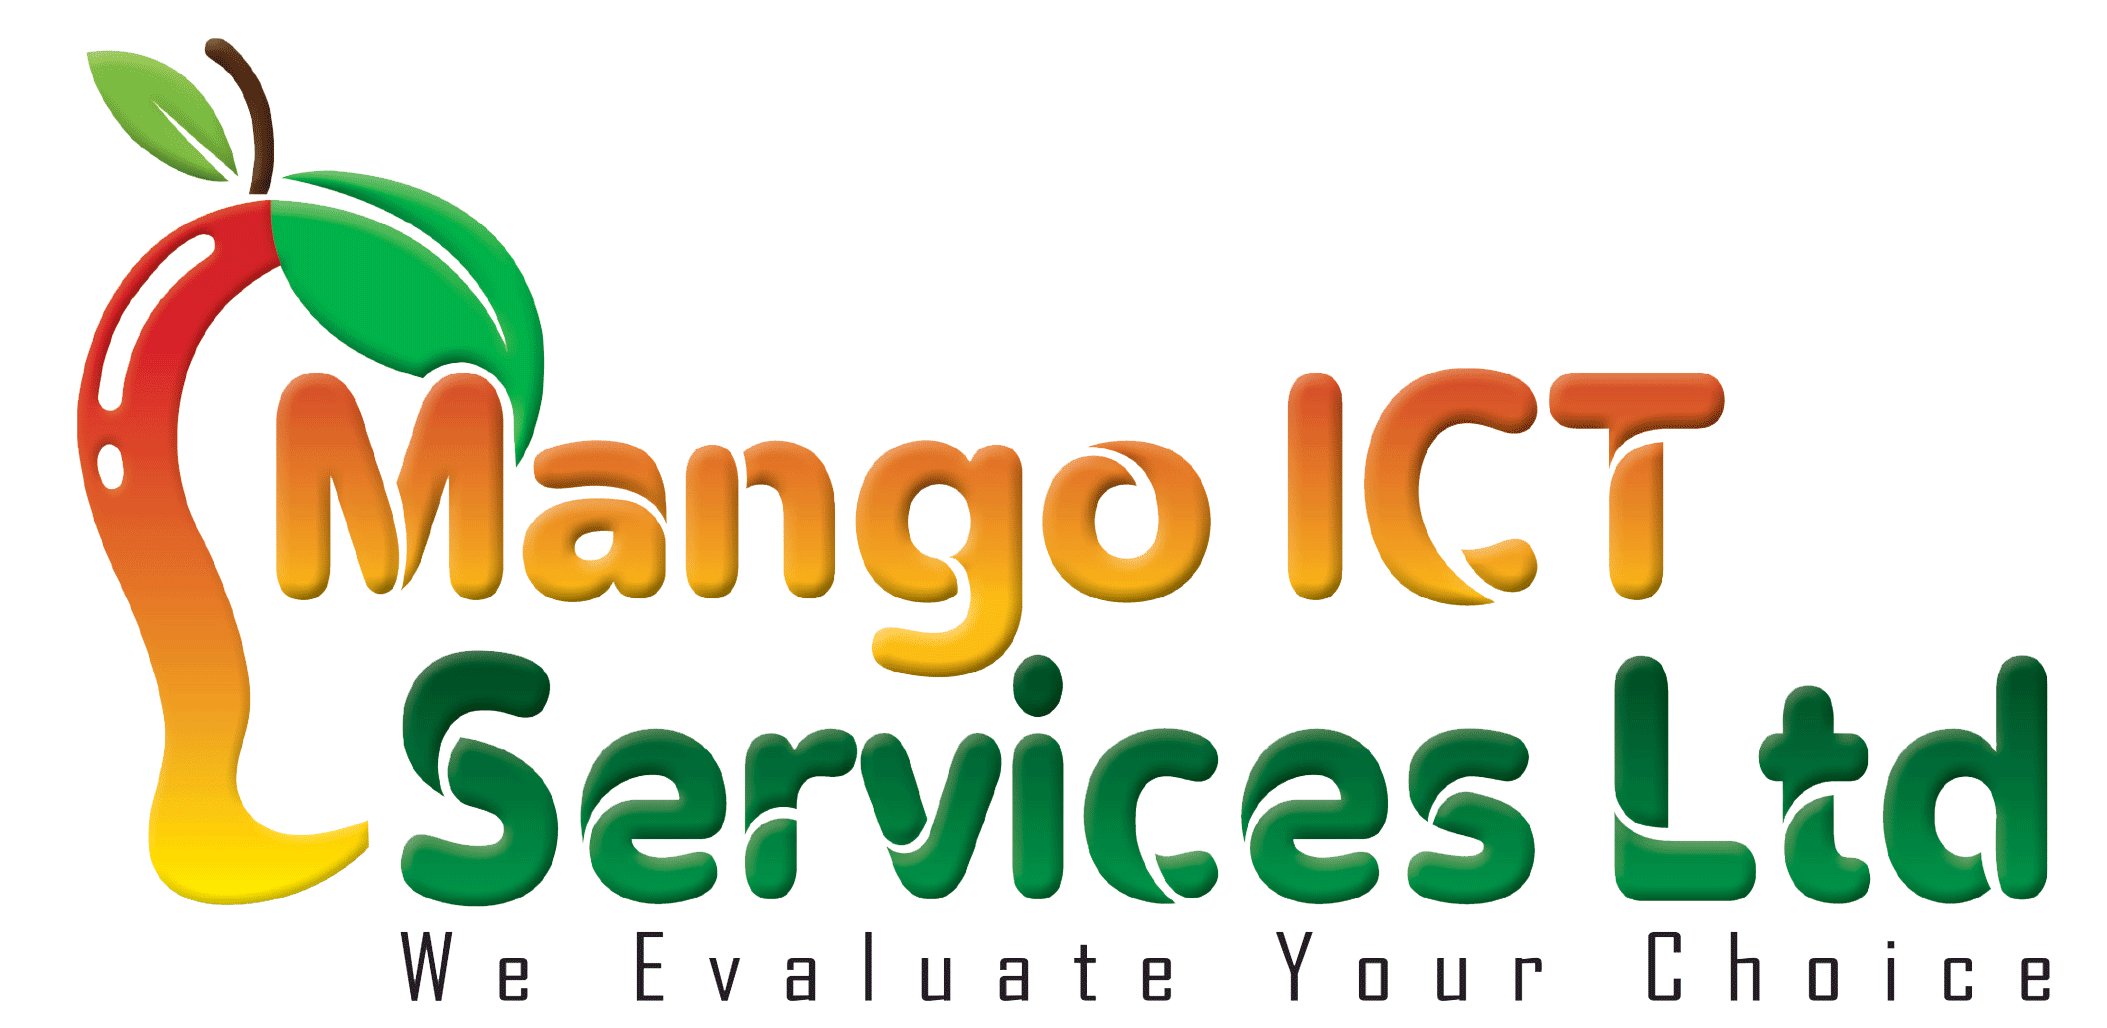 Mango ICT Services Ltd